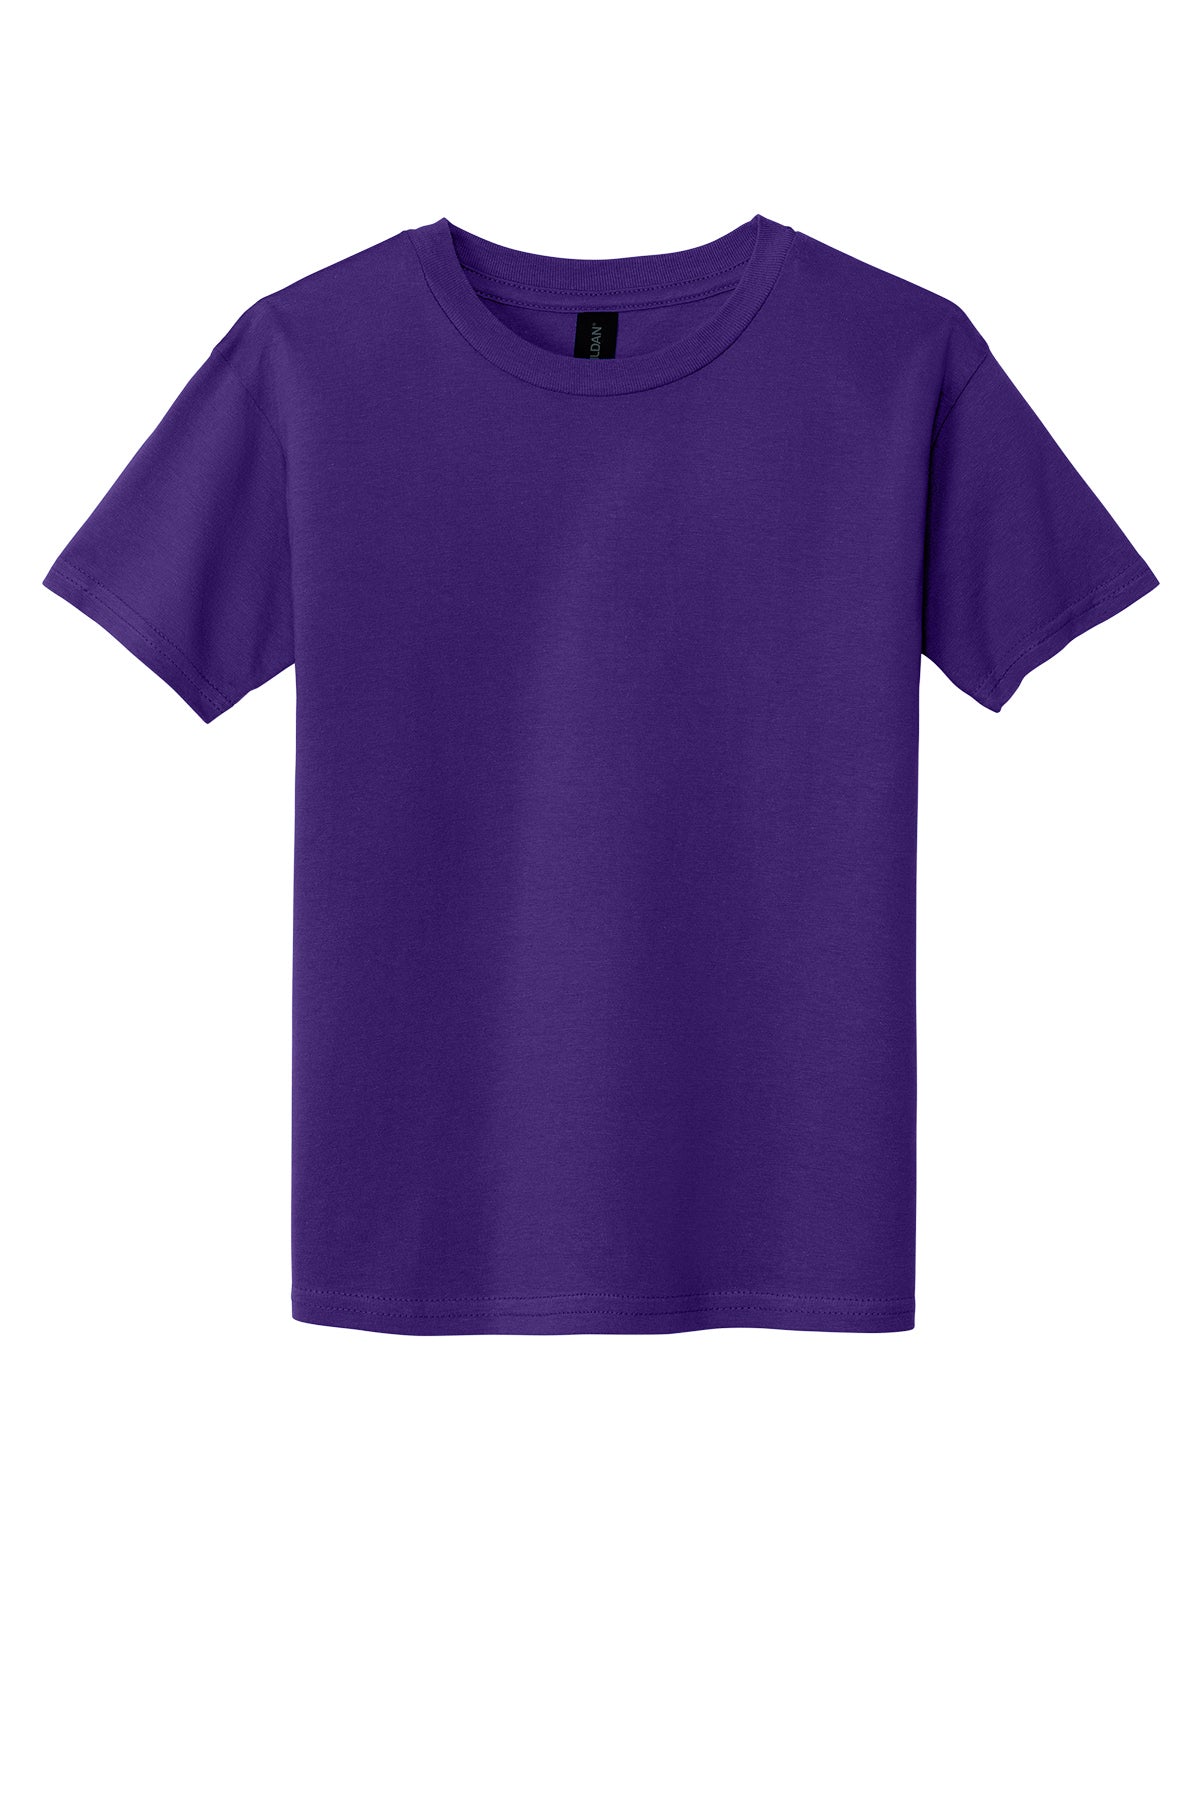 Gilden 64000B Youth T-Shirt Yth Small / Purple